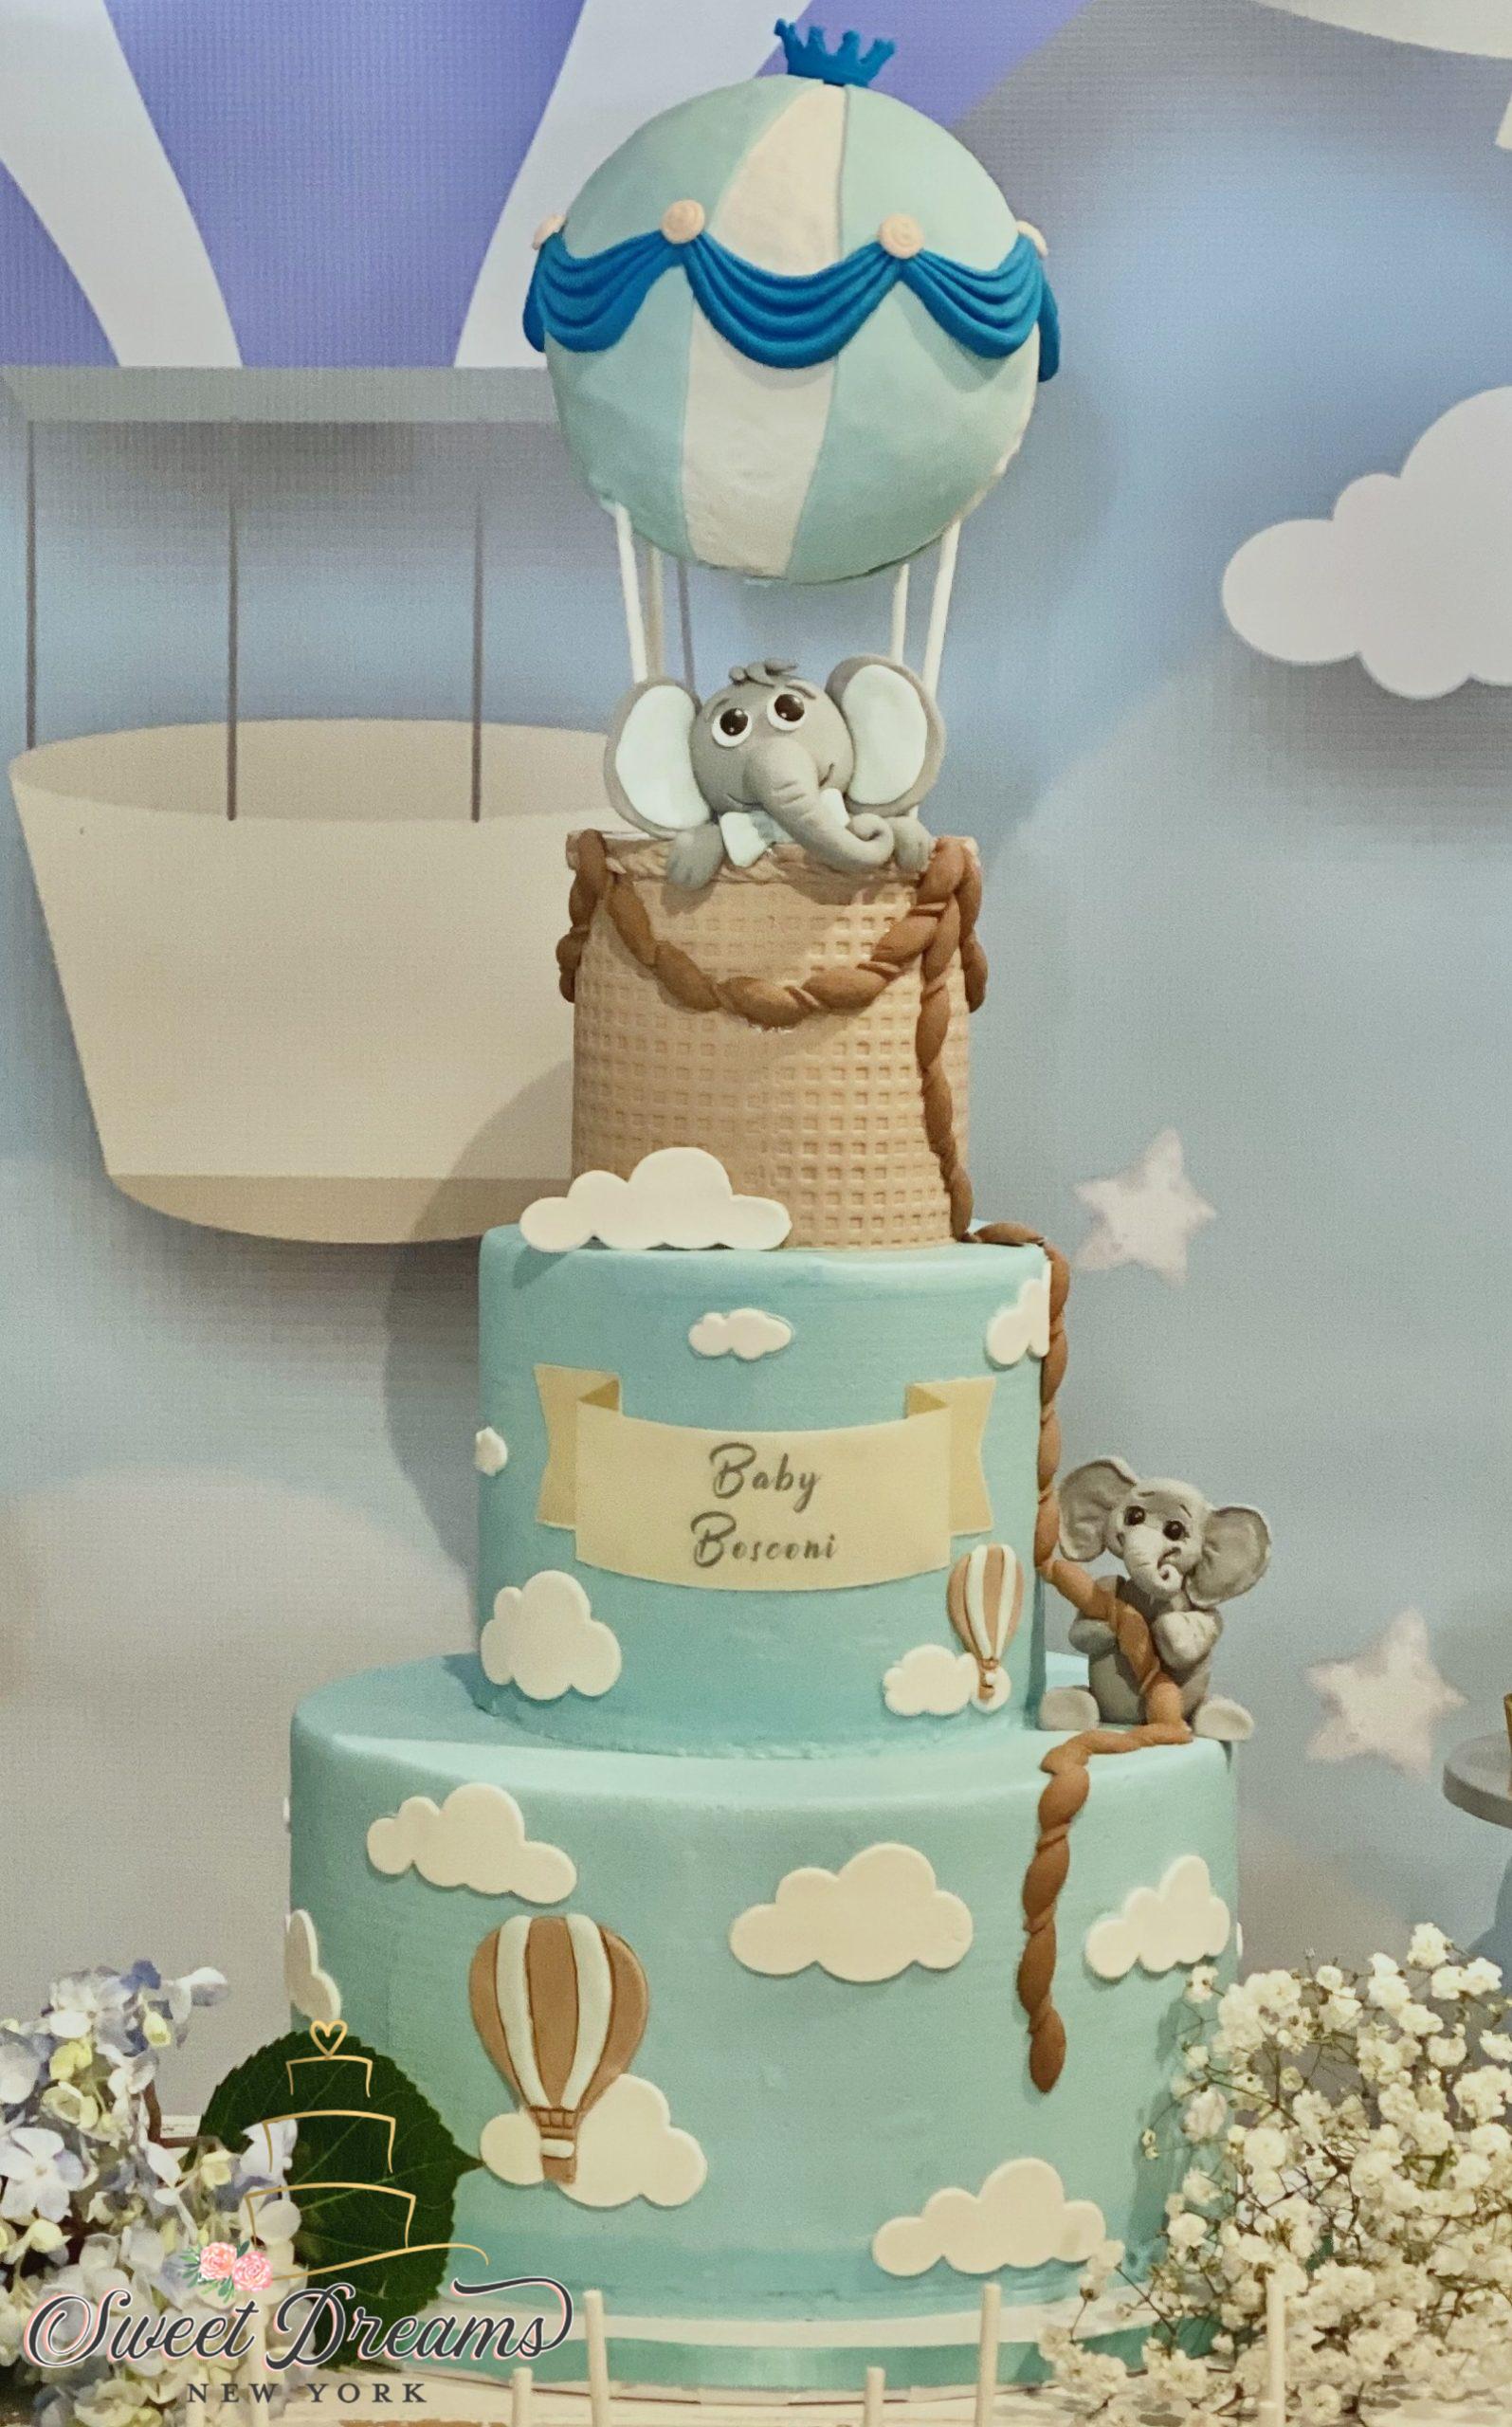 Baby Shower Cake Hot Air Balloon elephant baby cake Specialty Cake custom cakeLong Island NYC